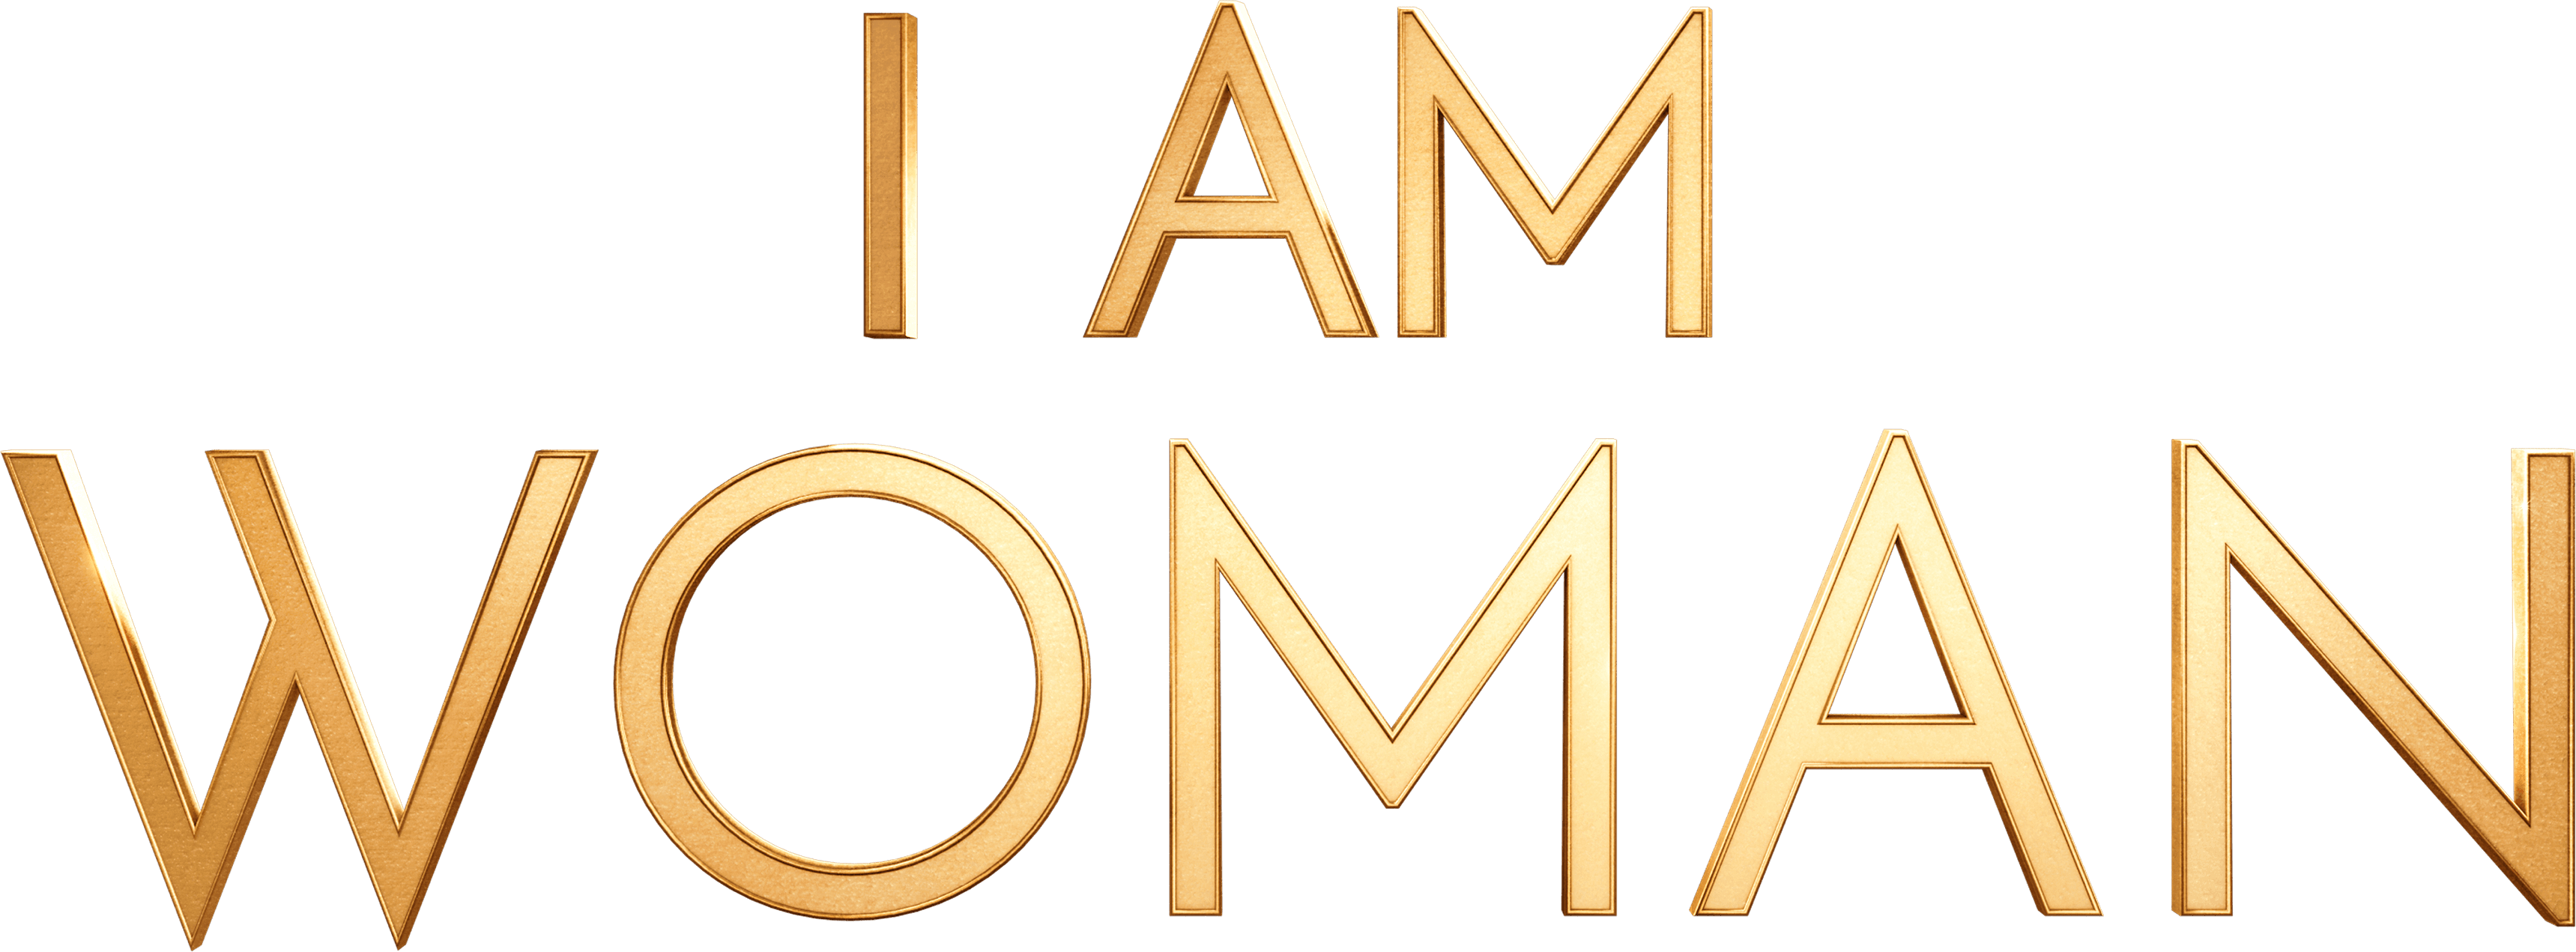 I Am Woman logo